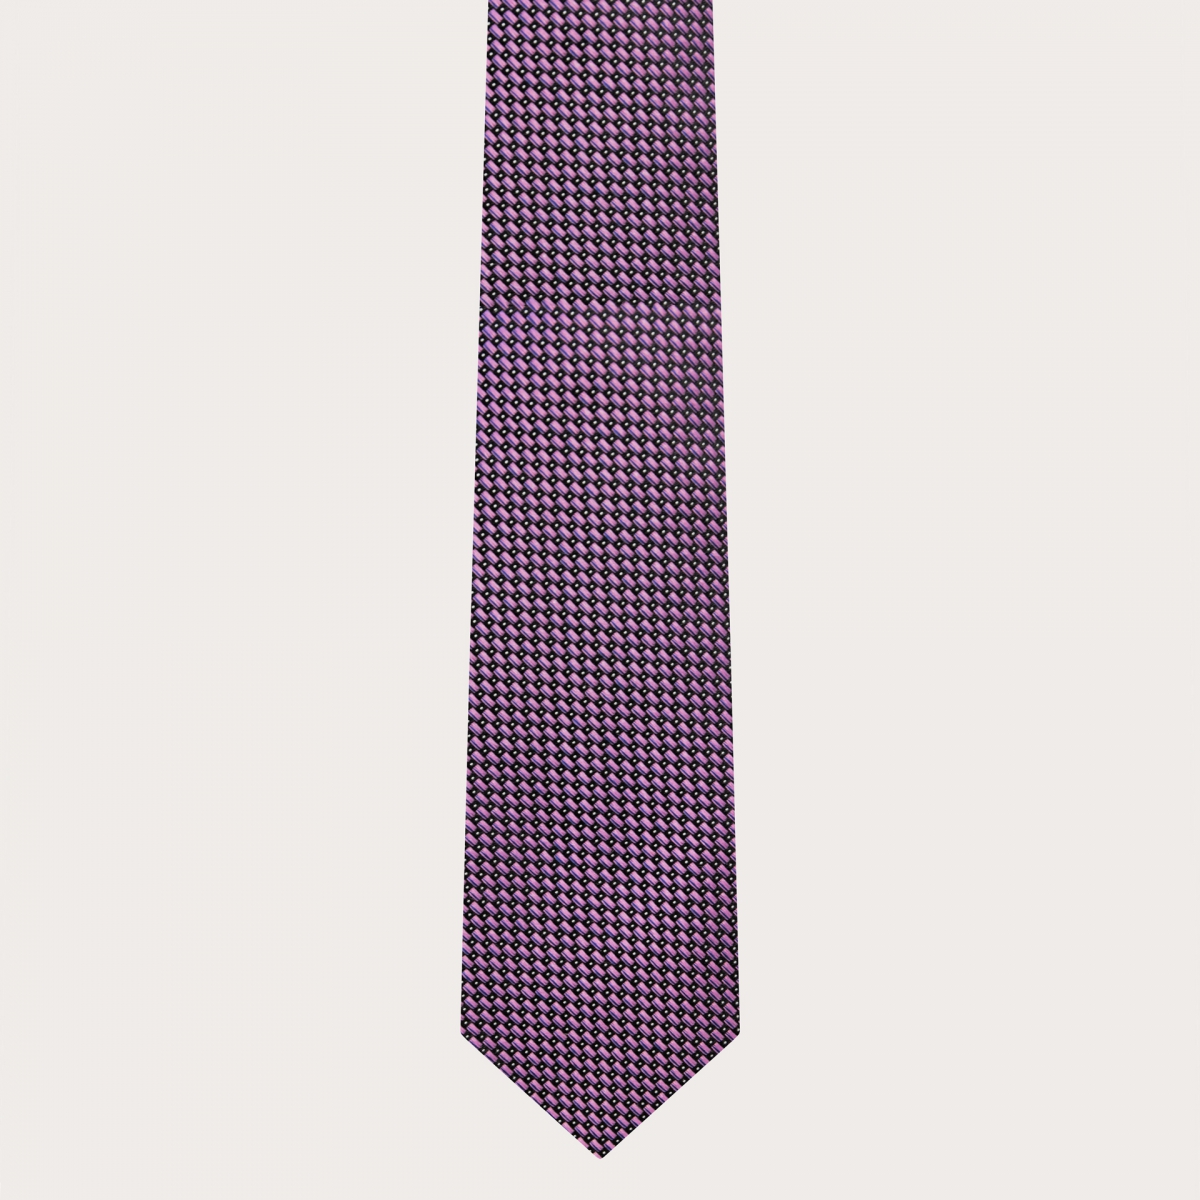 Dotted pattern pink men's formal tie